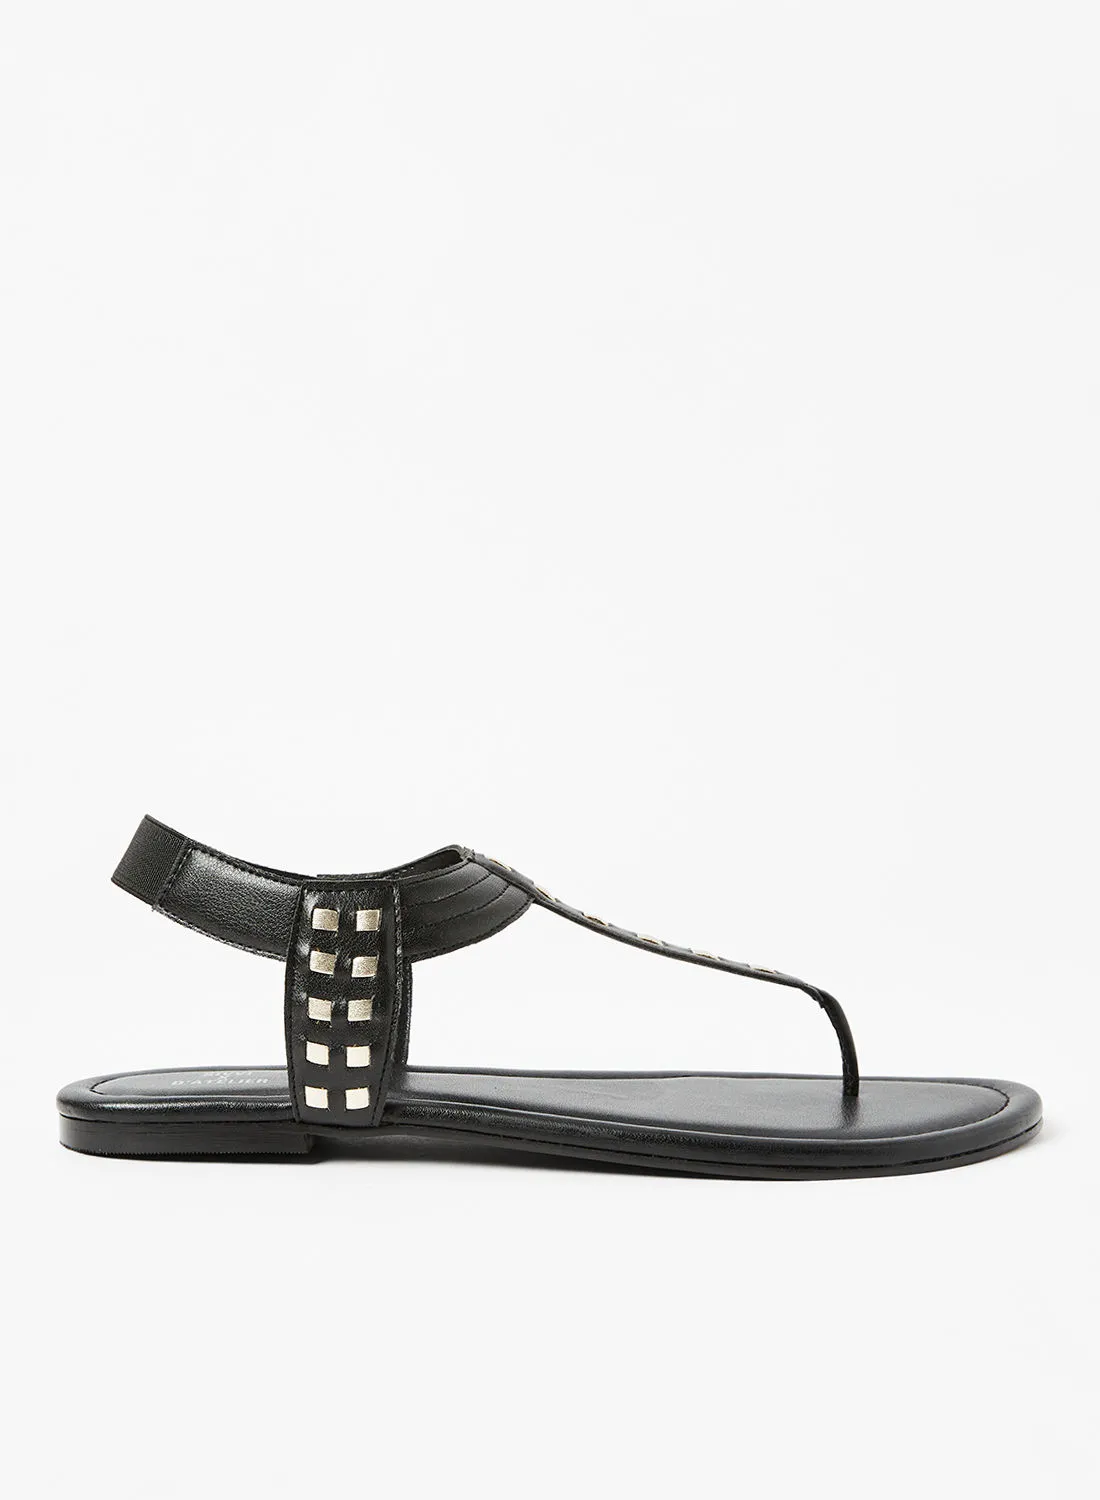 Sivvi x D'Atelier Studded Flat Sandals Black